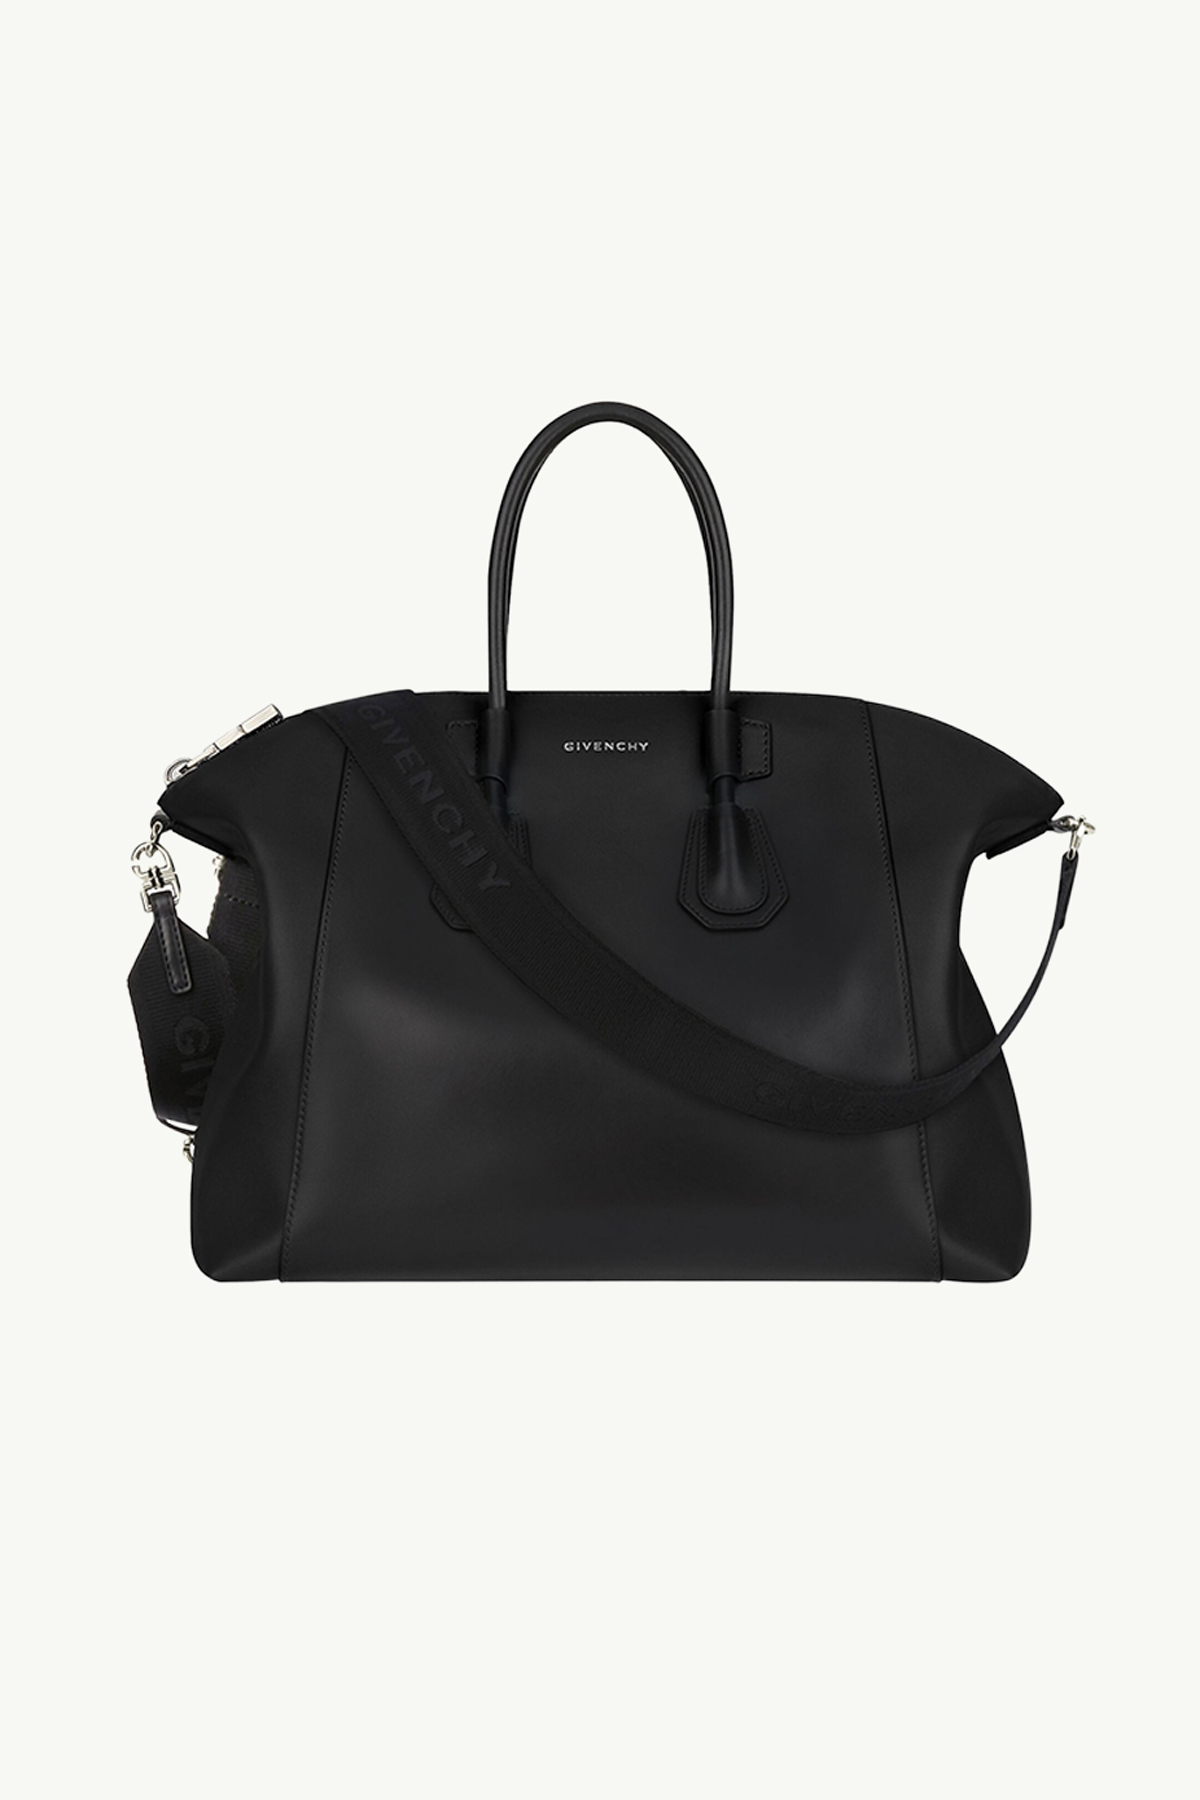 GIVENCHY Small Antigona Sport Bag in Black Smooth Leather 0